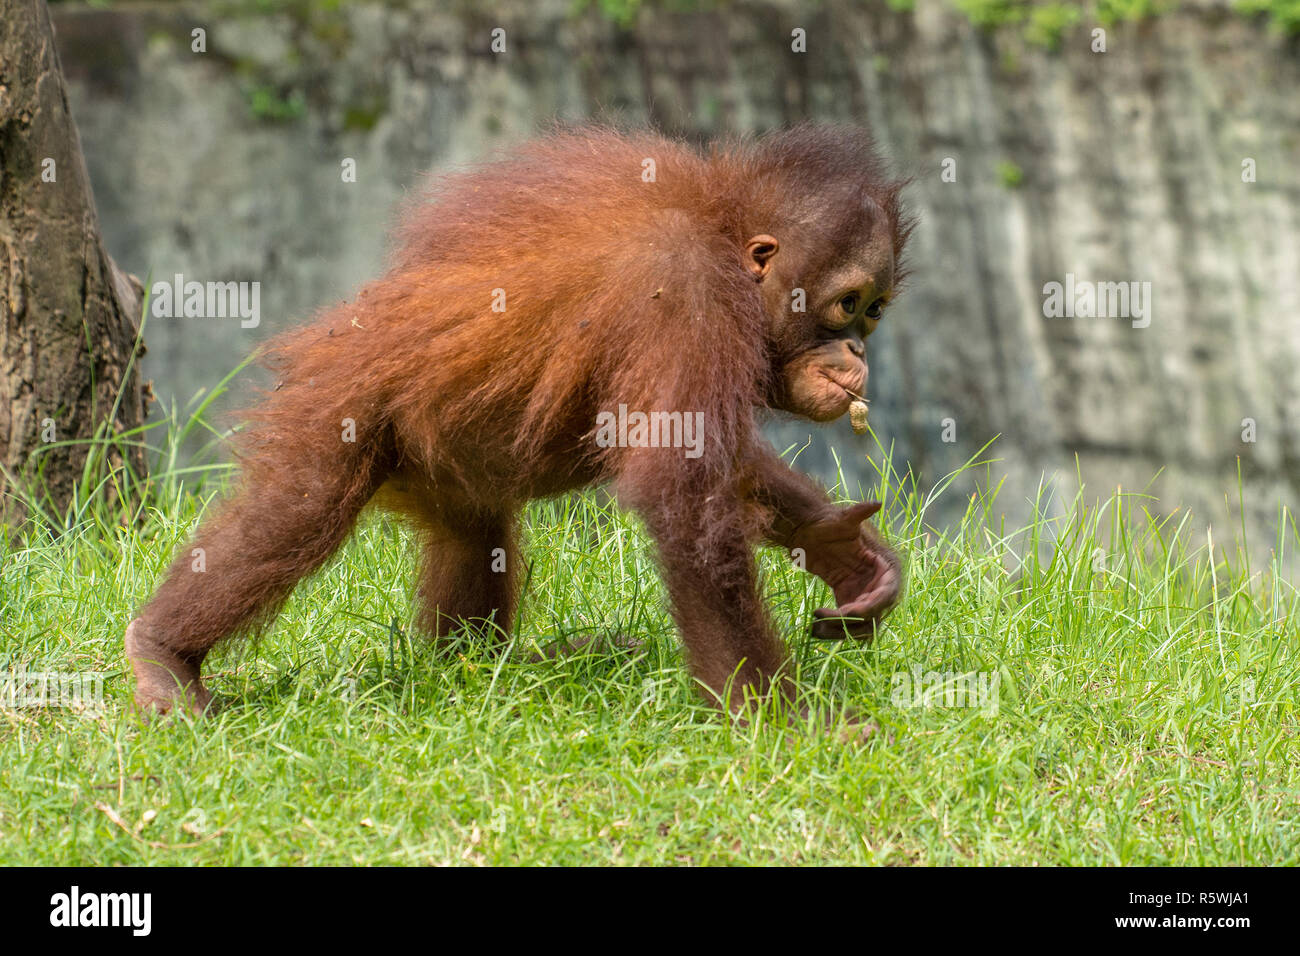 Infant orangutan walking, Borneo, Indonesia Stock Photo